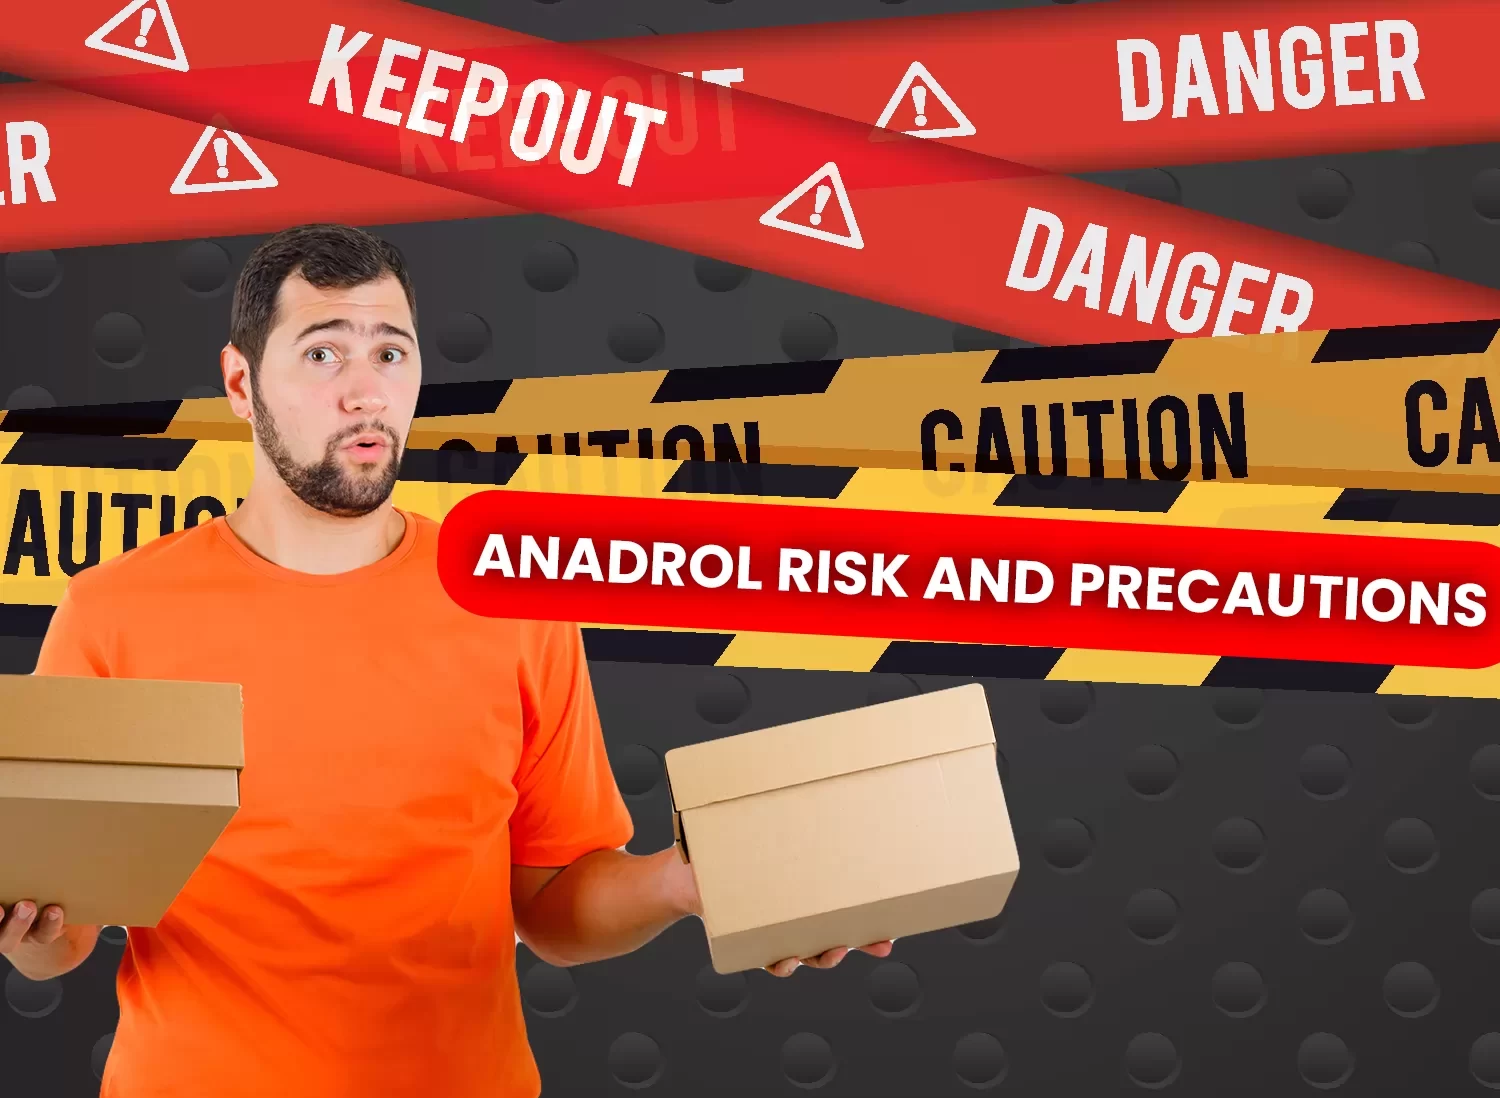 Anadrol risk and precautions